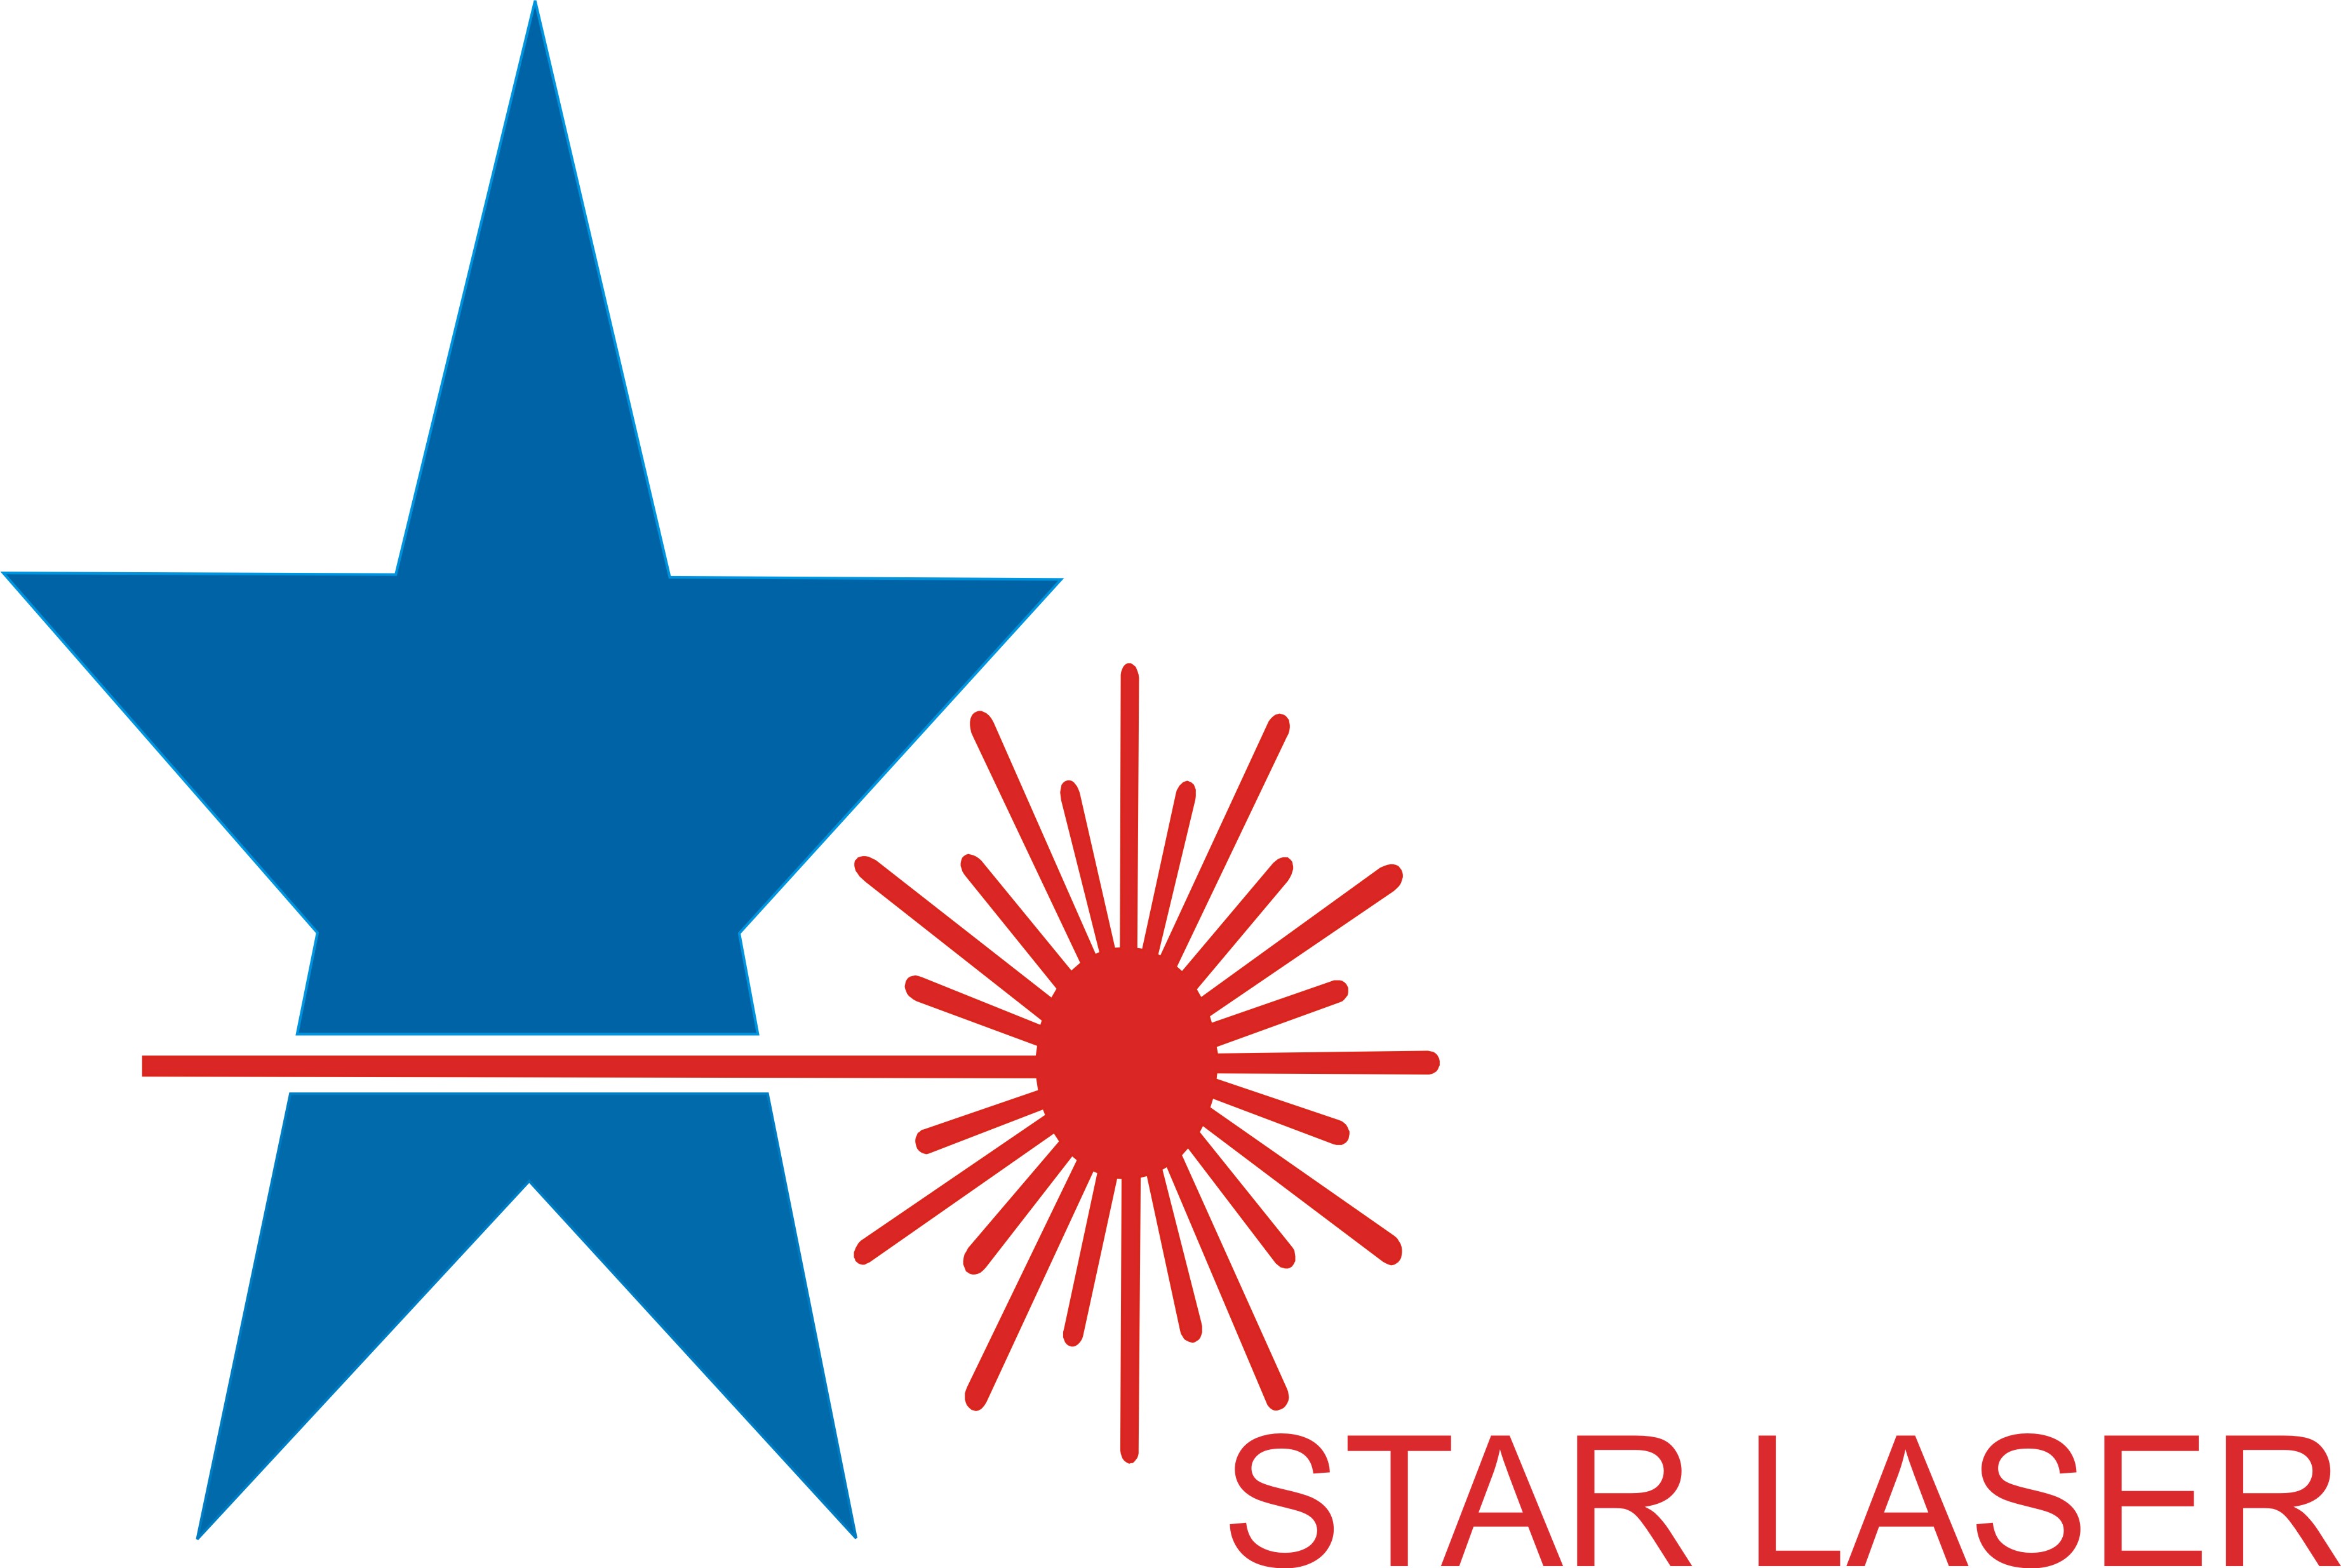 Star Laser Technology